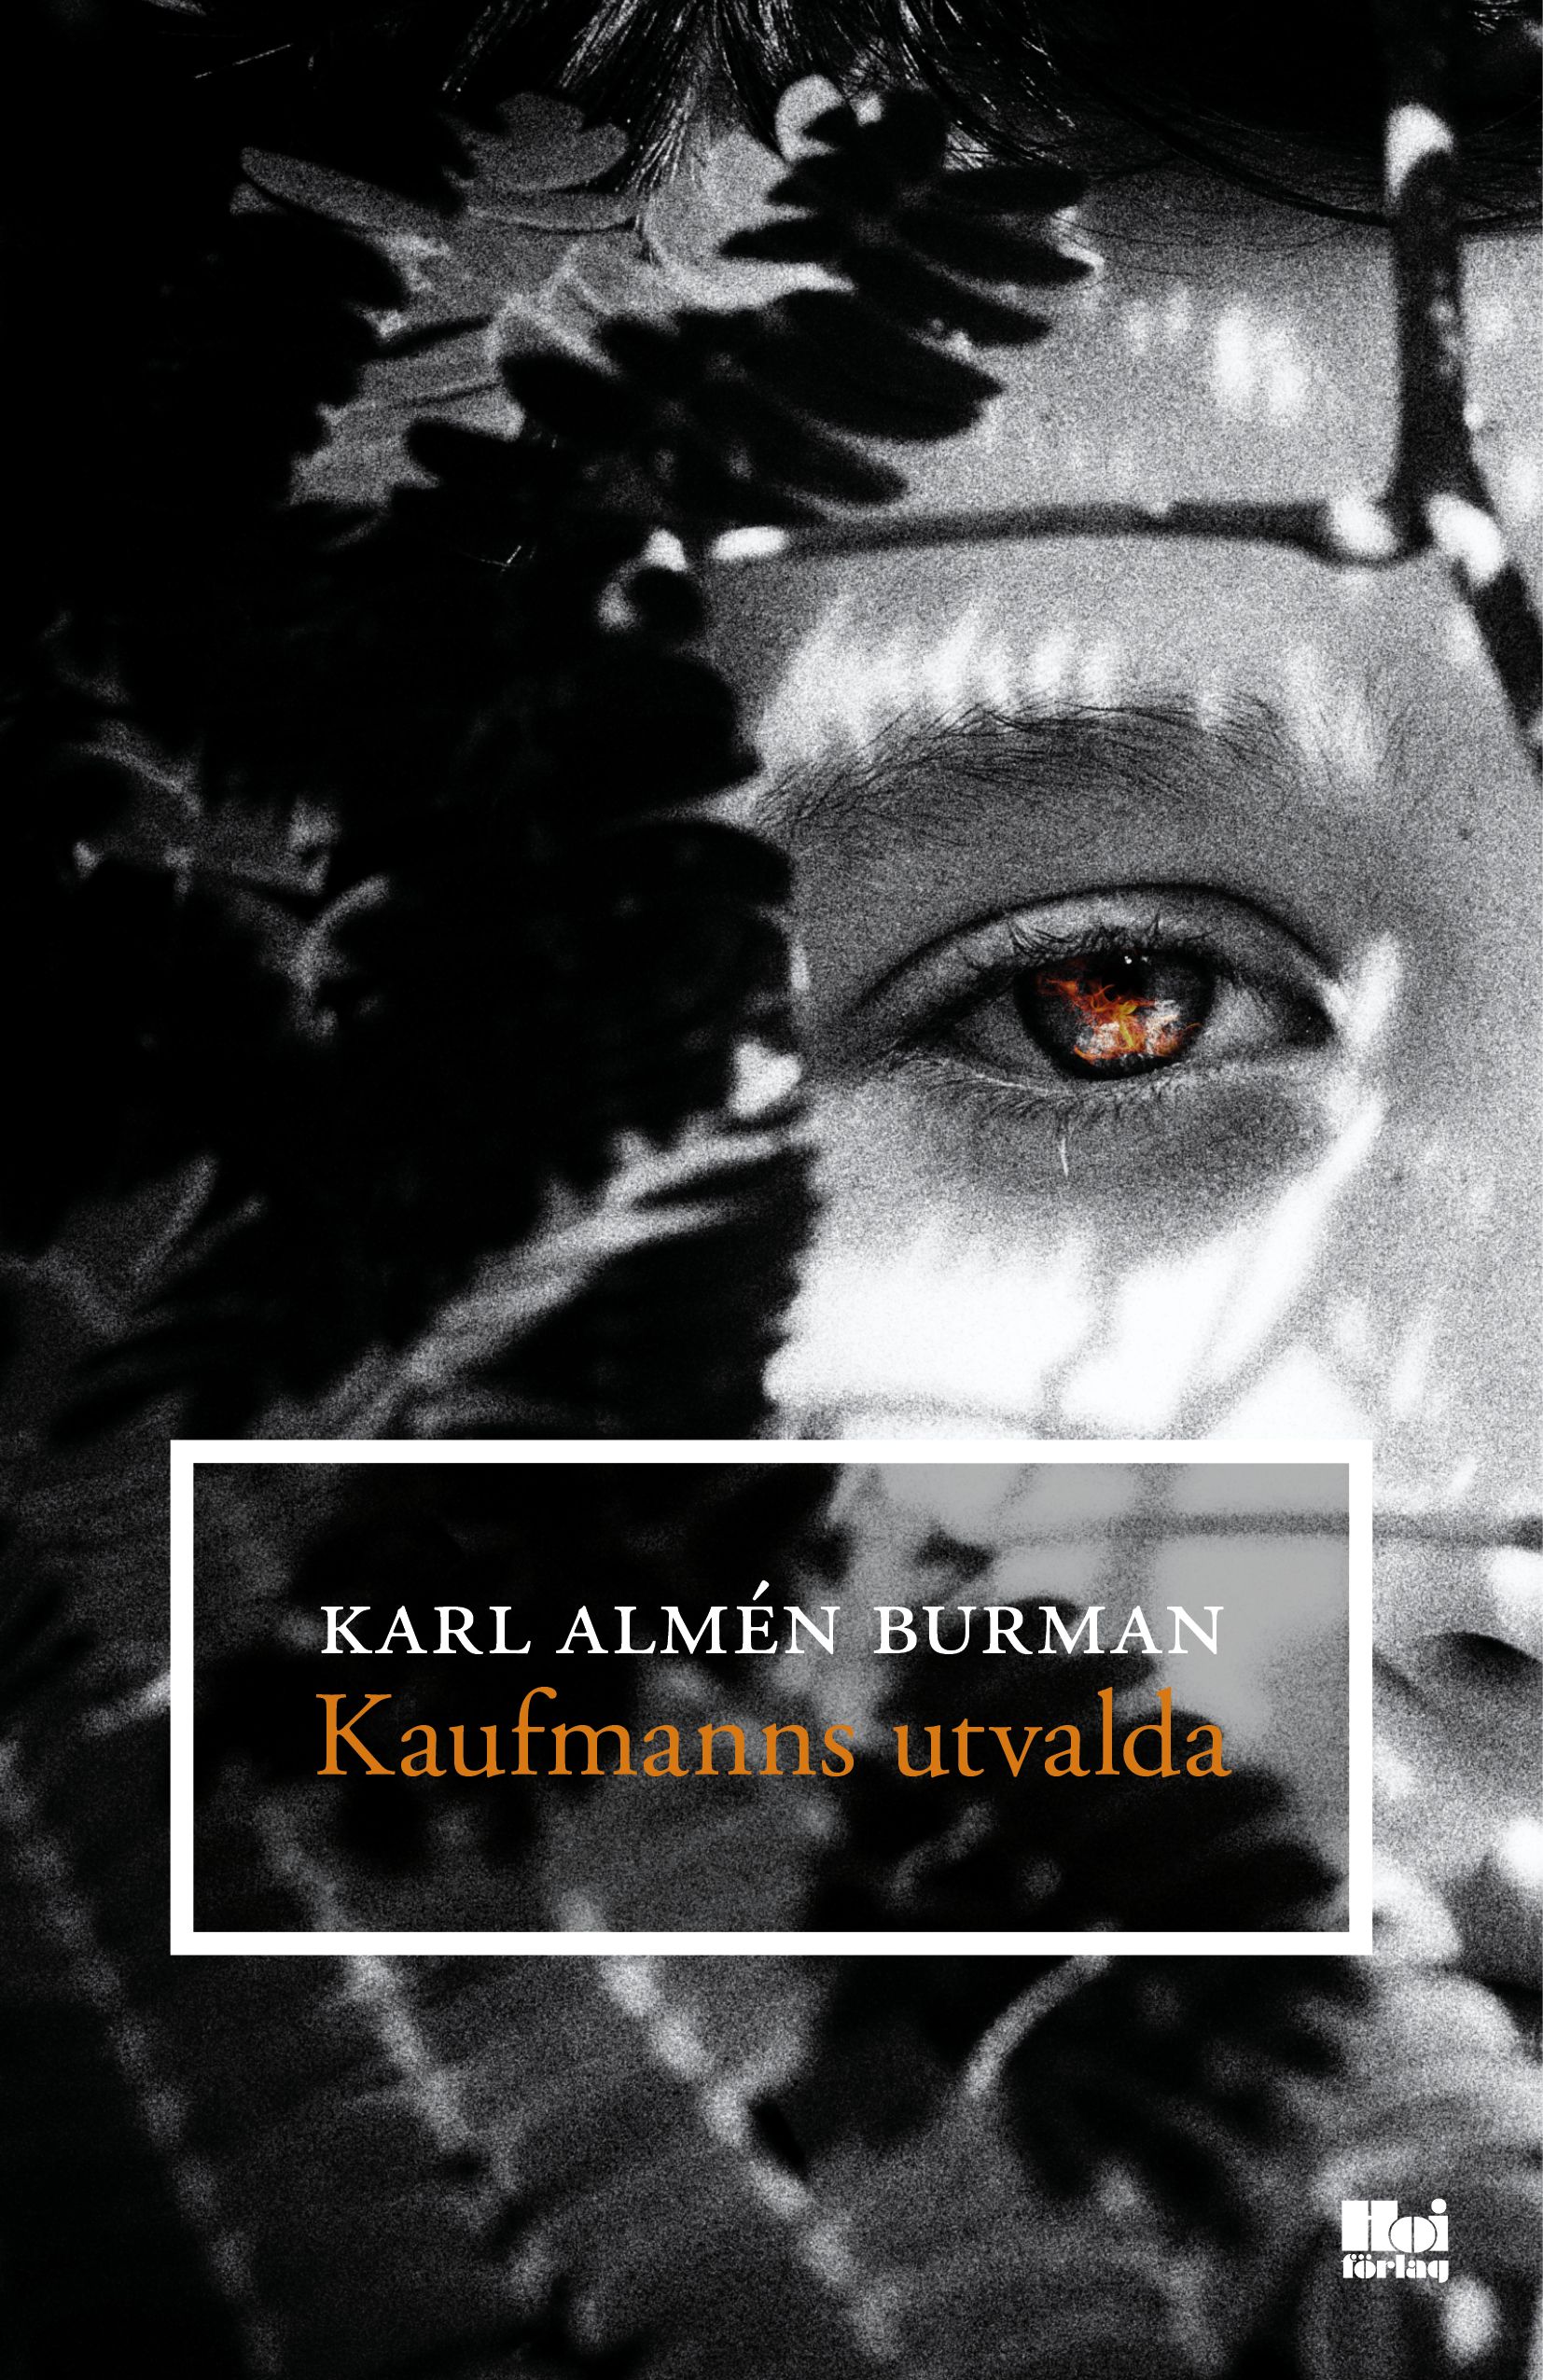 Kaufmanns utvalda, e-bok av Karl Almén Burman